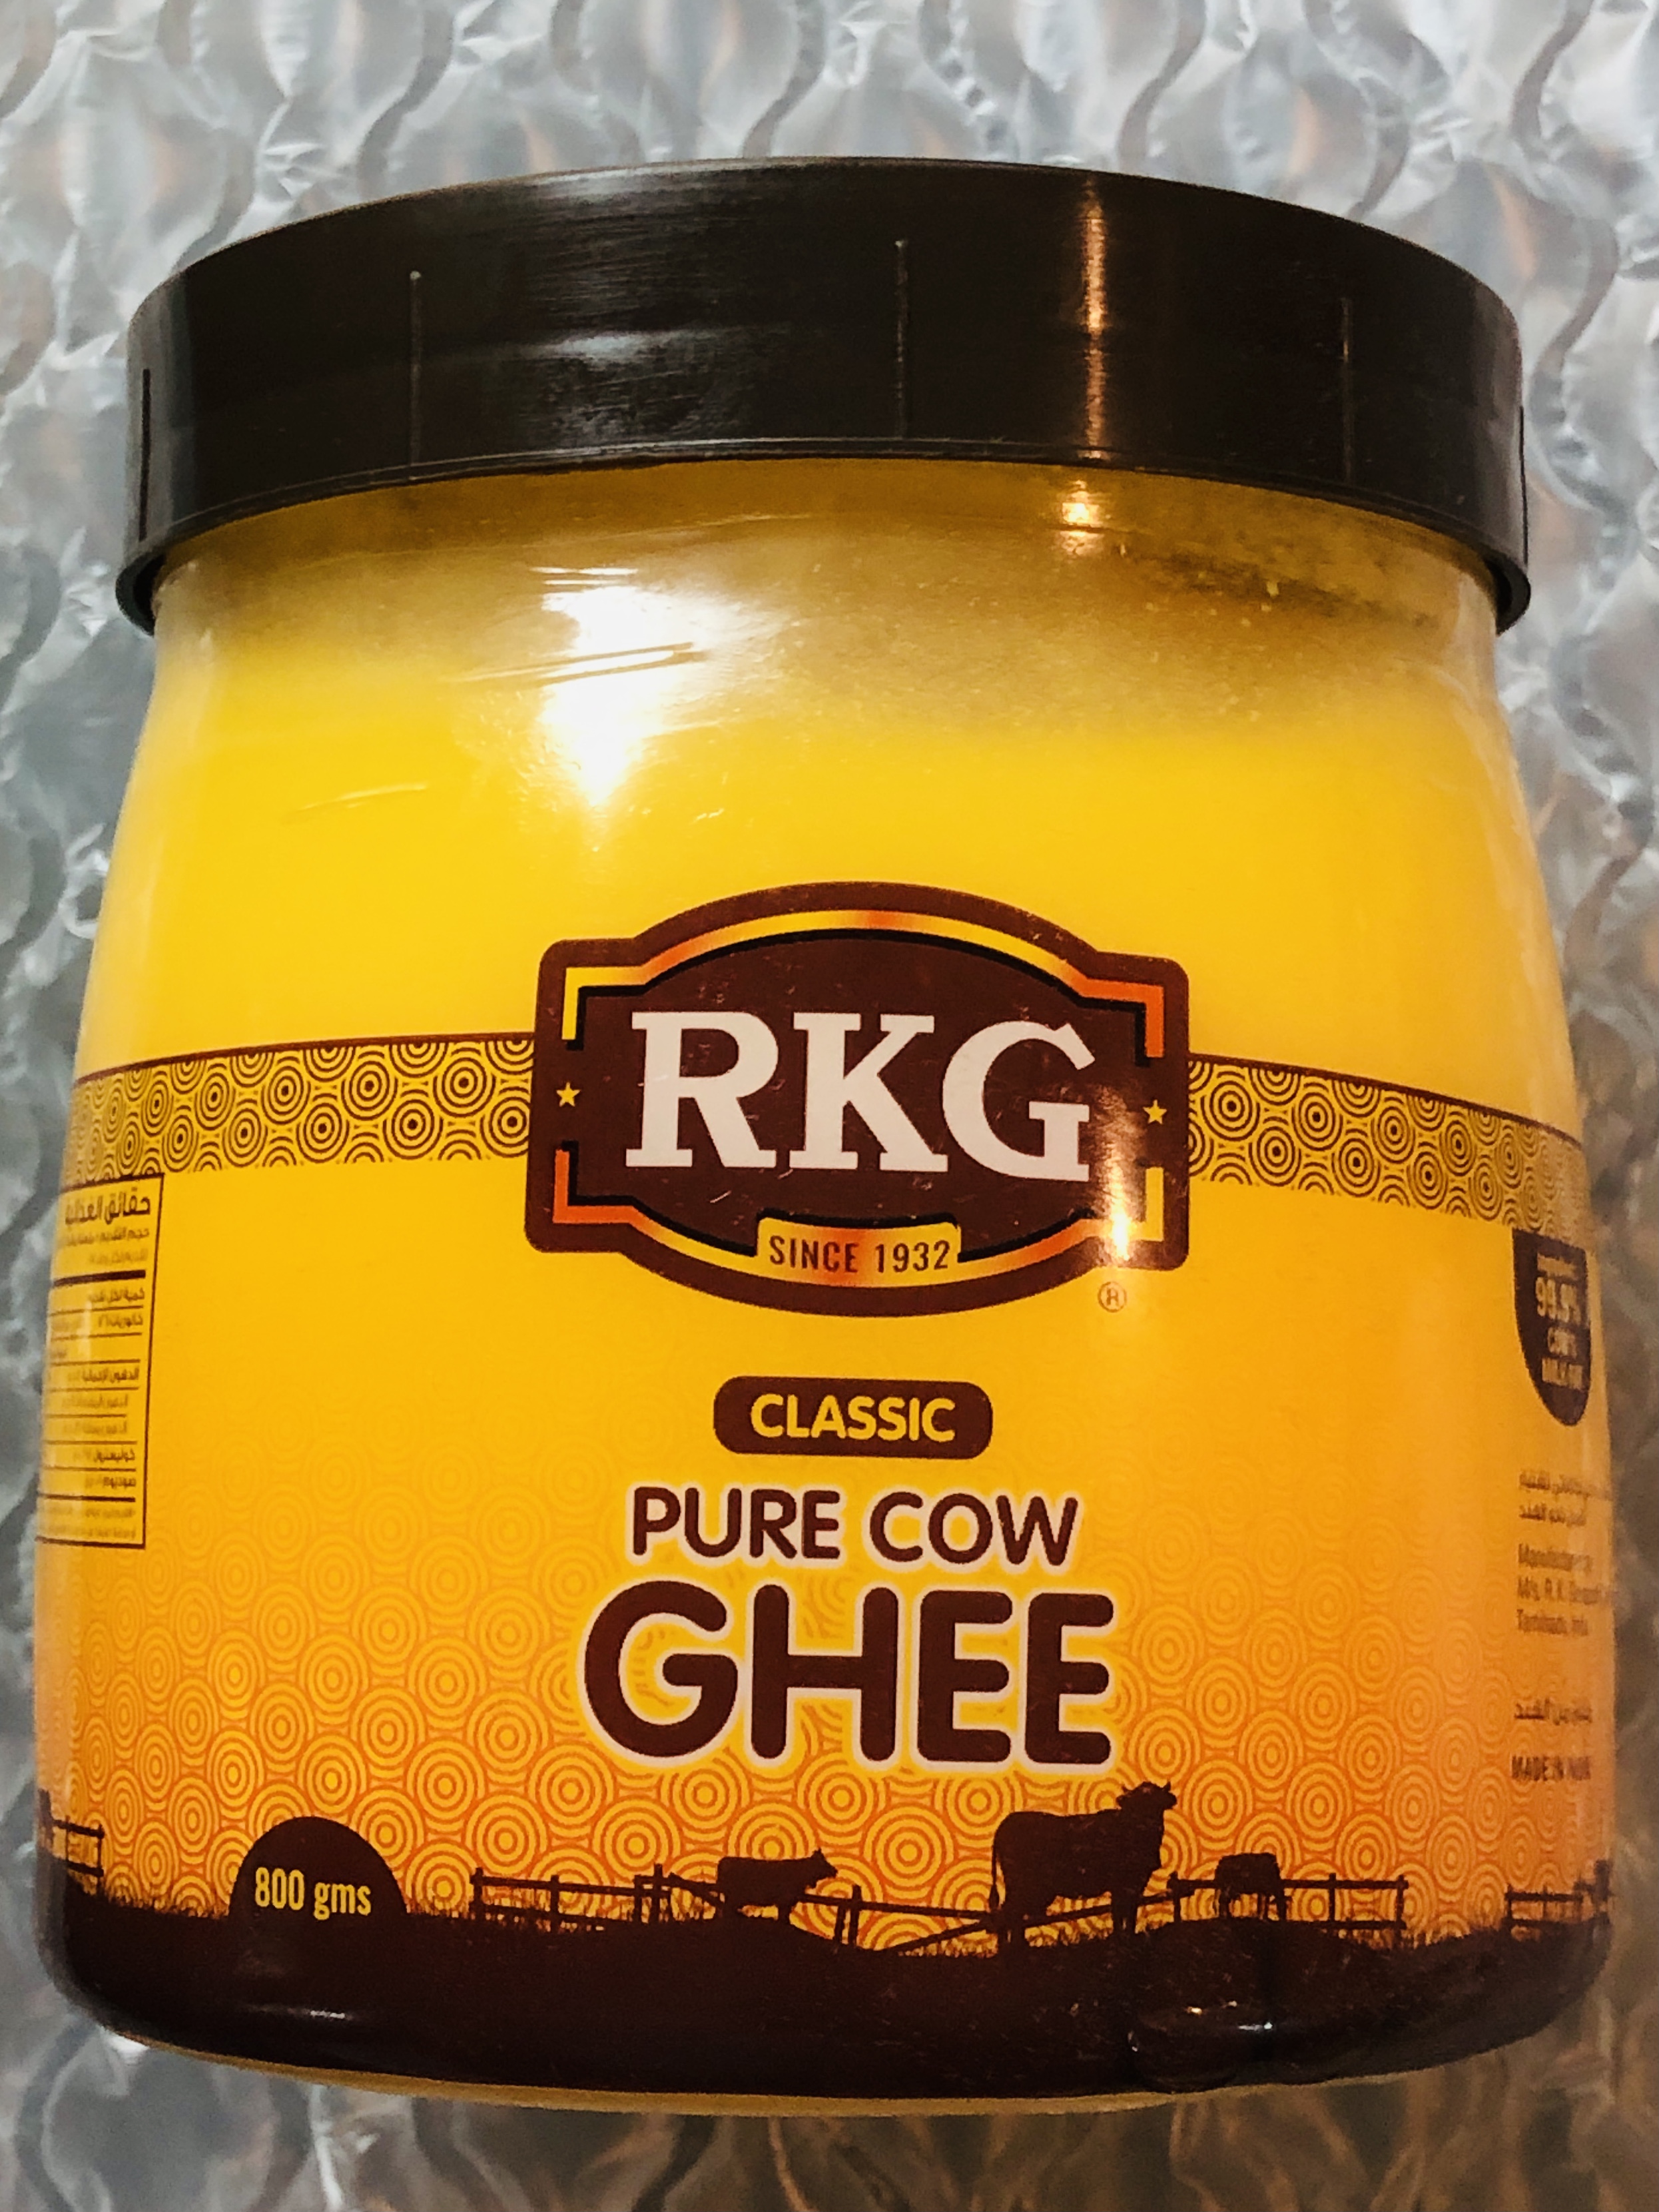 RKG PURE COW GHEE 800g เนยกีใสคีโต นมวัว 100% จากอินเดีย (Clarified Butter) 🇮🇳.